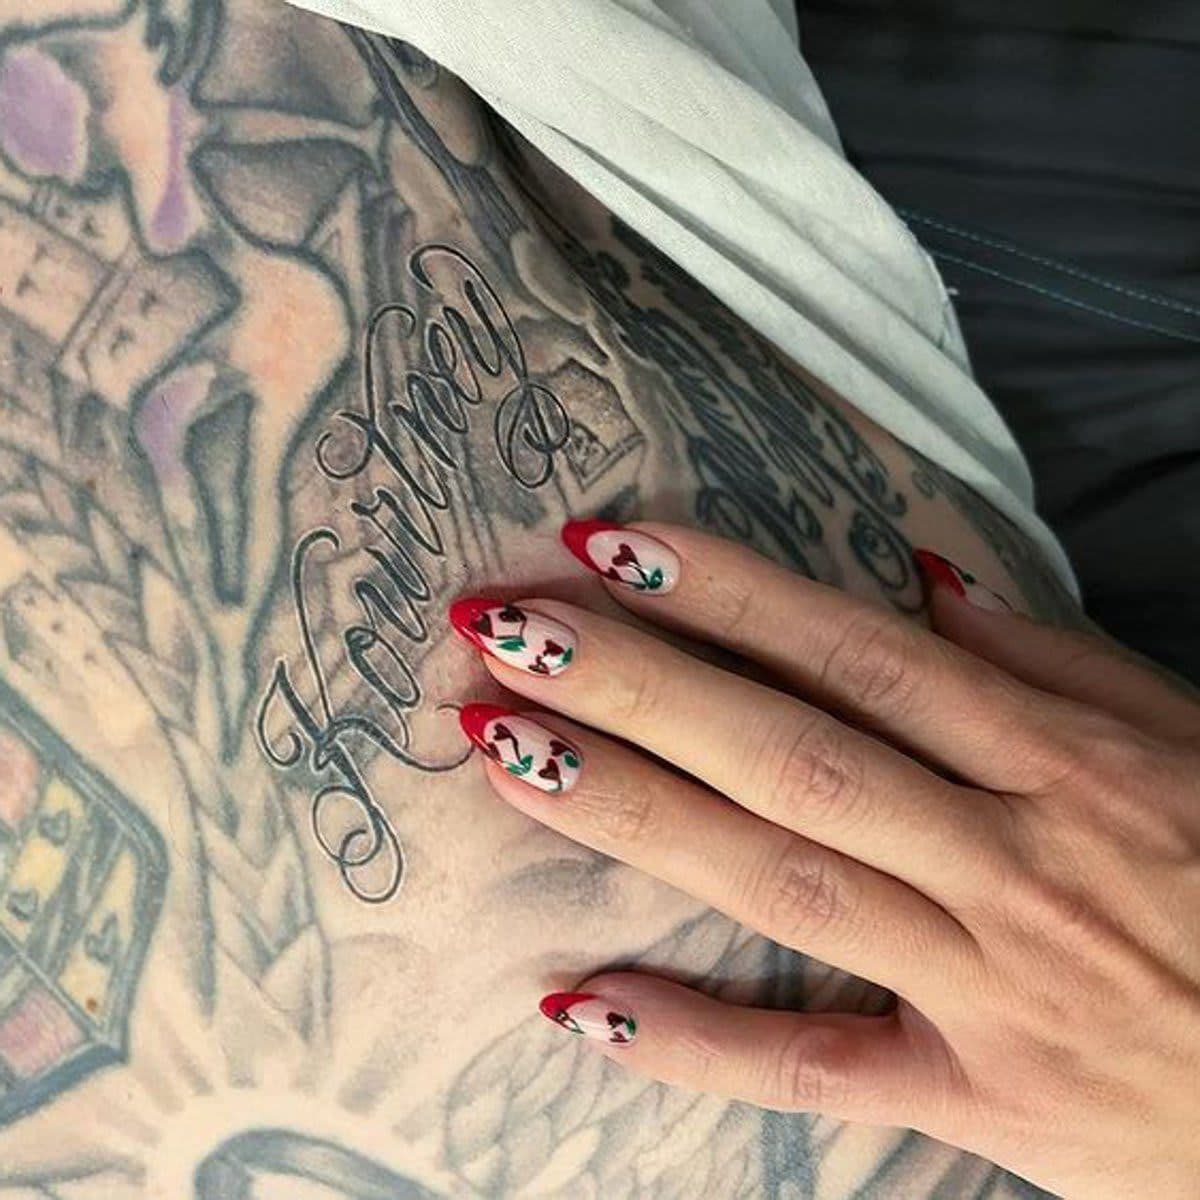 Travis Barker's "Kourtney" Tattoo